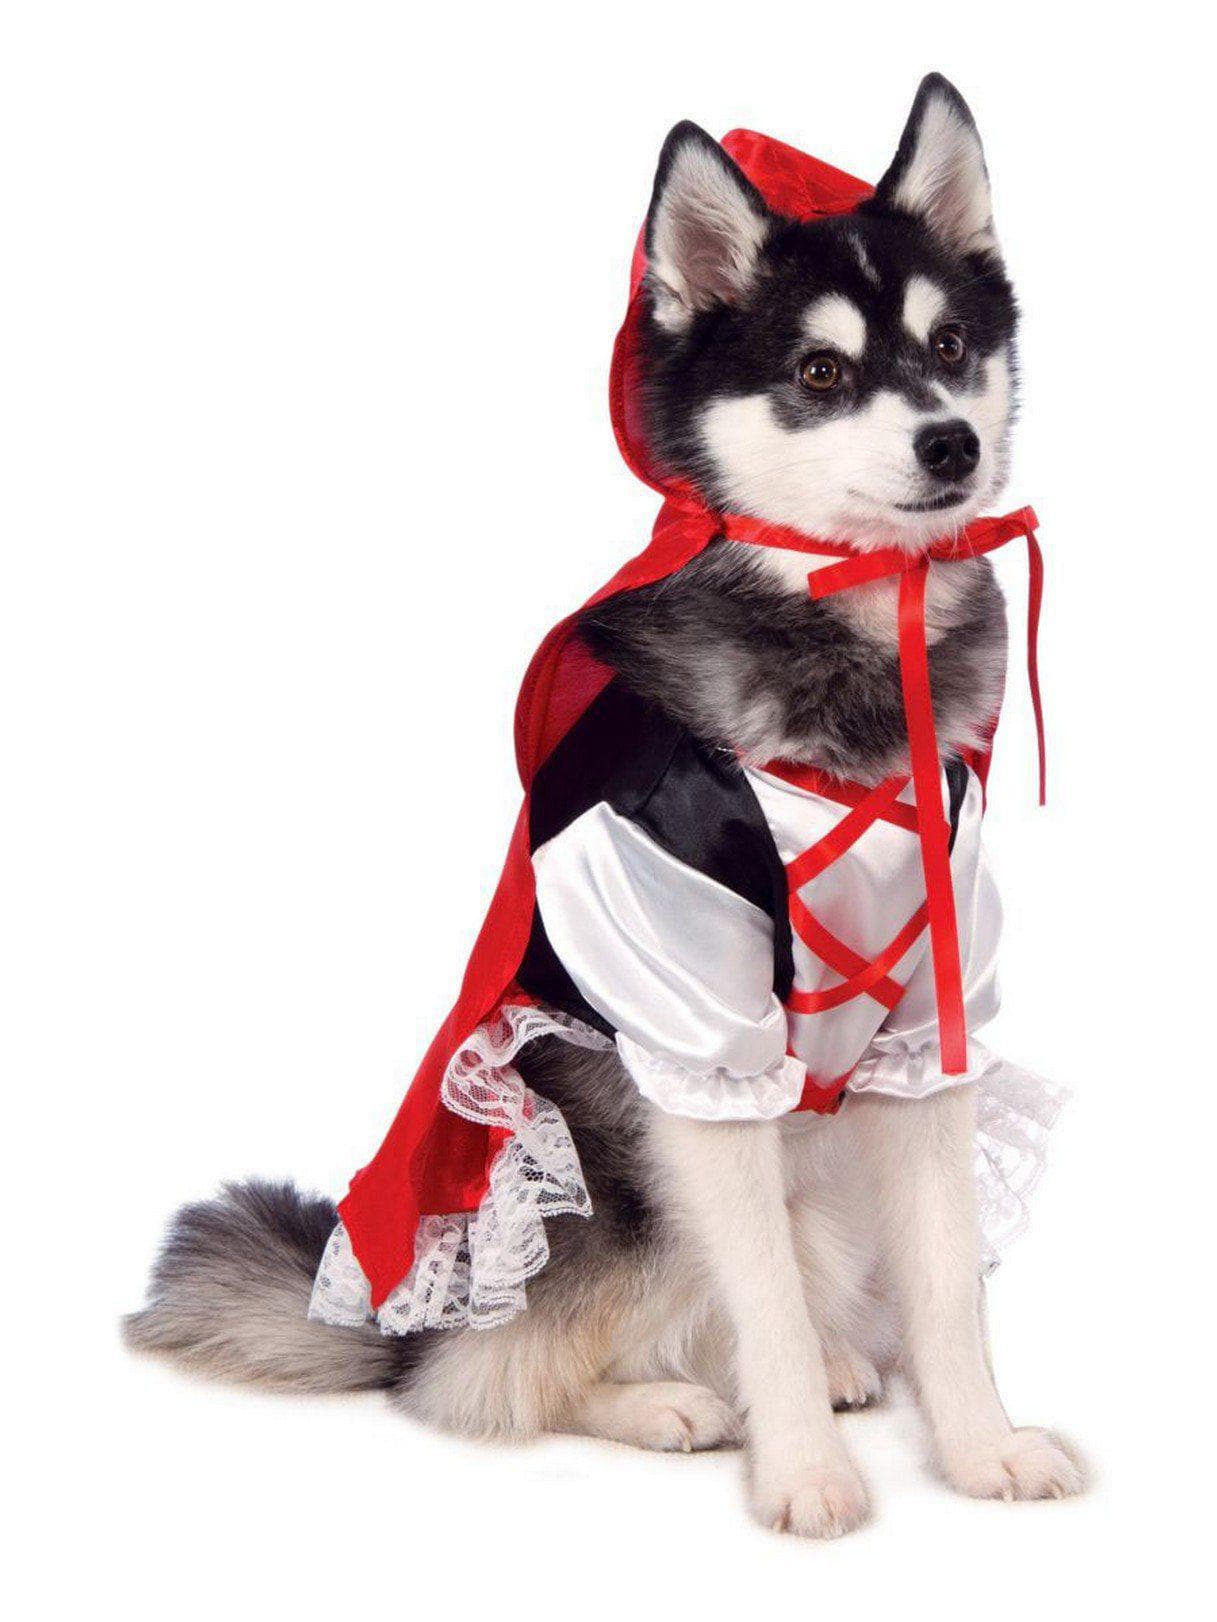 Red Riding Hood Pet Costume - costumes.com